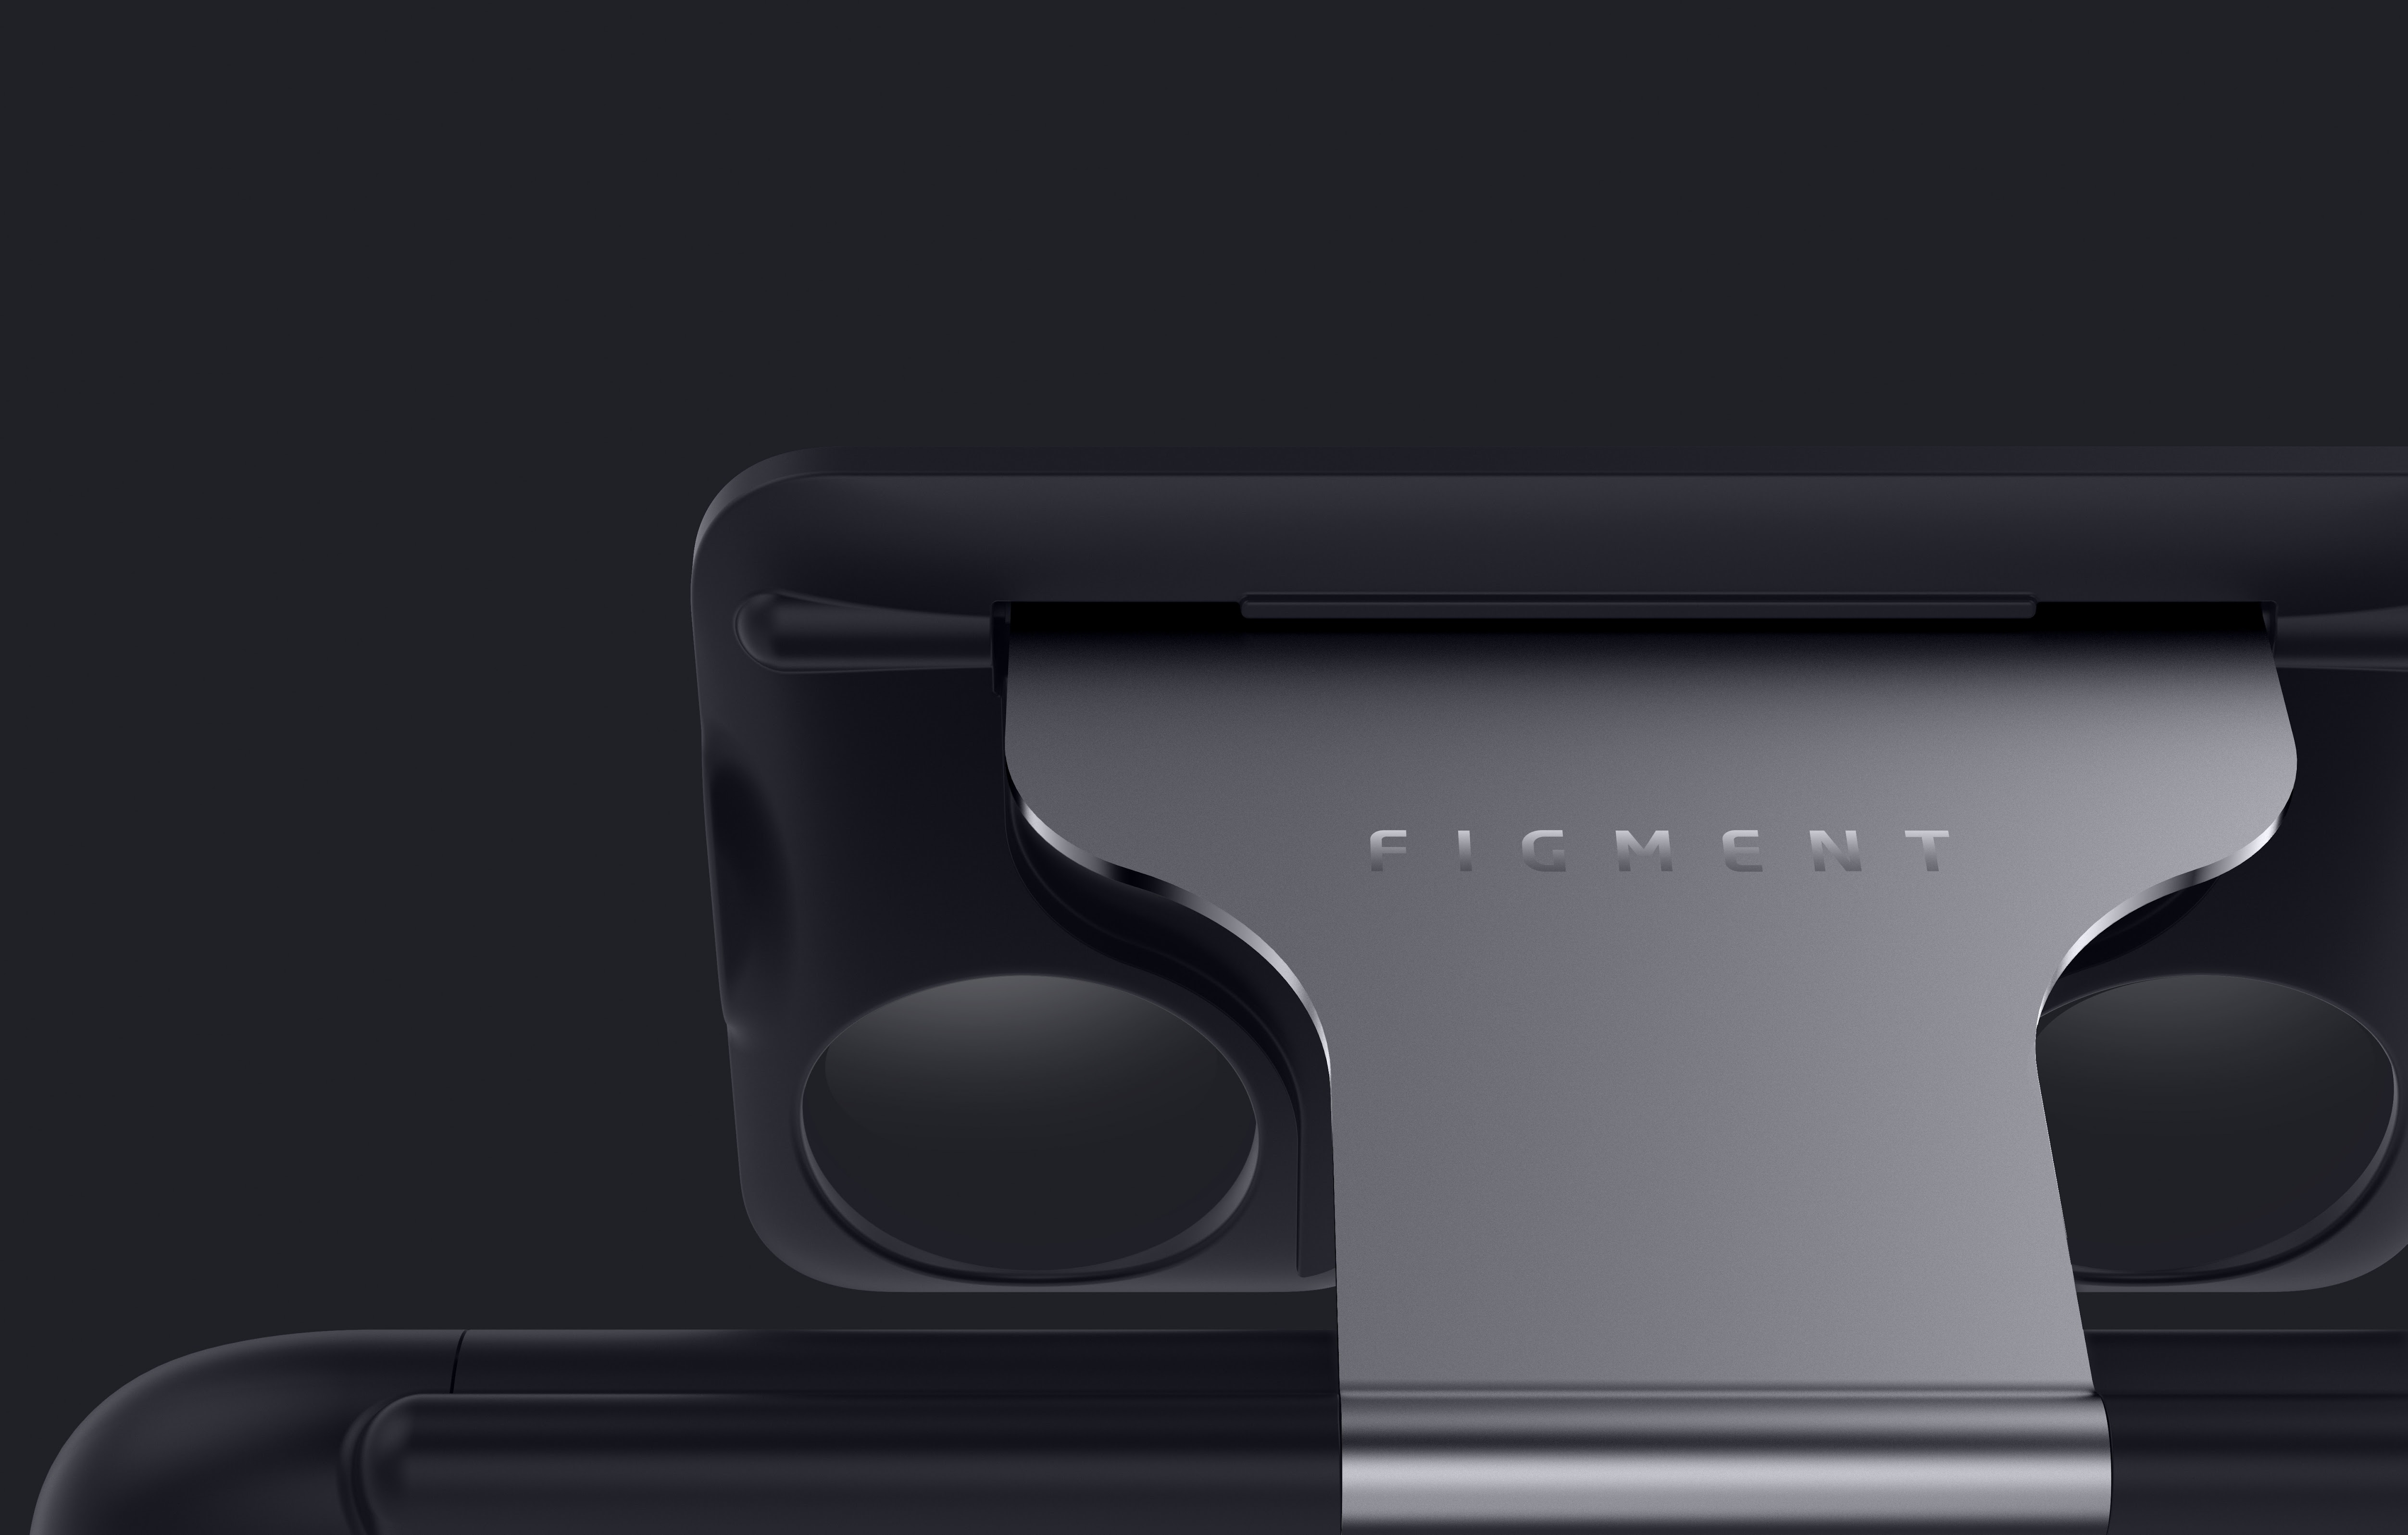 figment vr phone case kickstarter b1 dark macro4